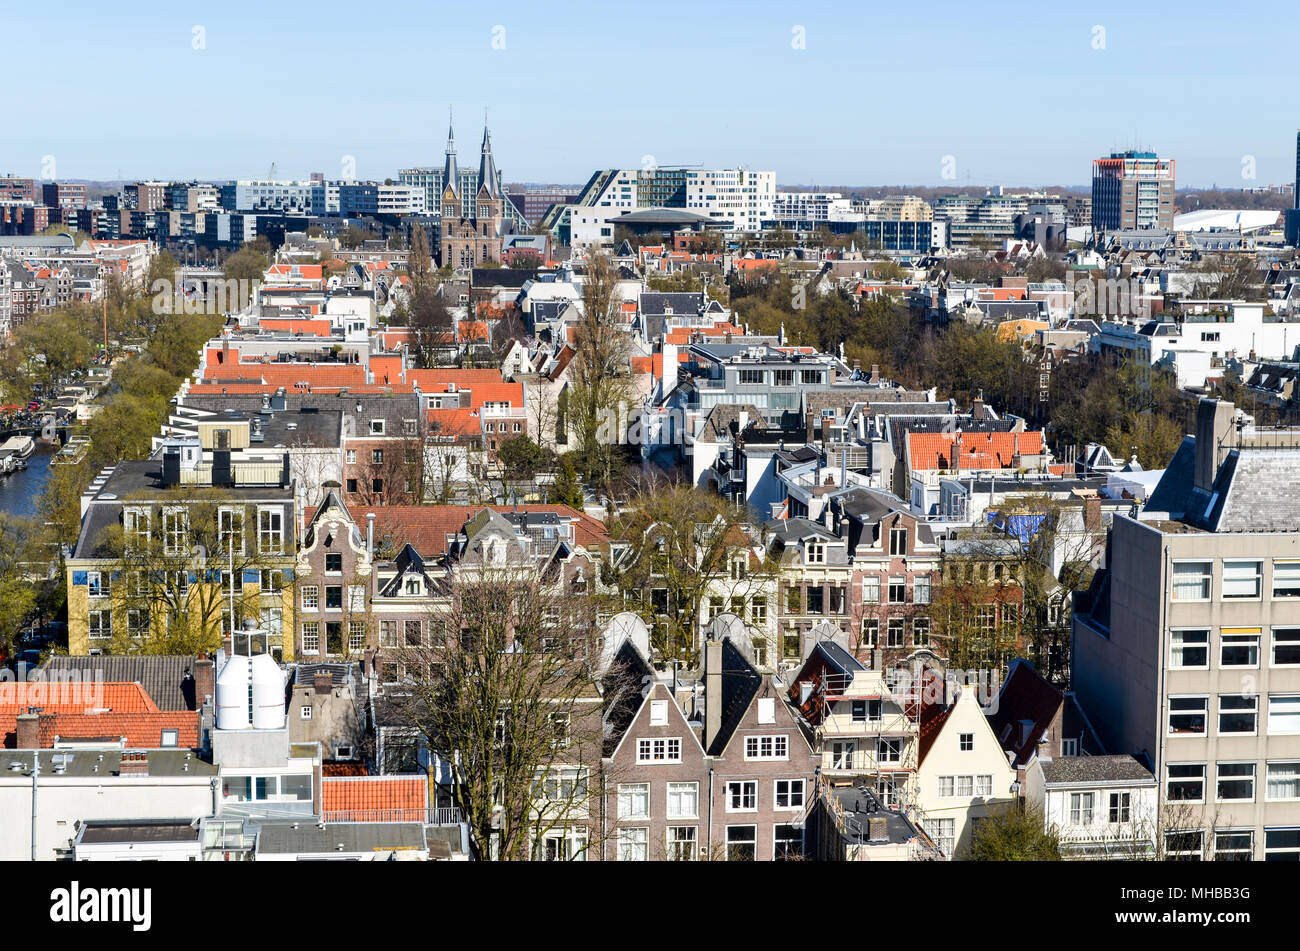 Aerial view of Amsterdam (Jordaan district), Netherlands Stock Photo